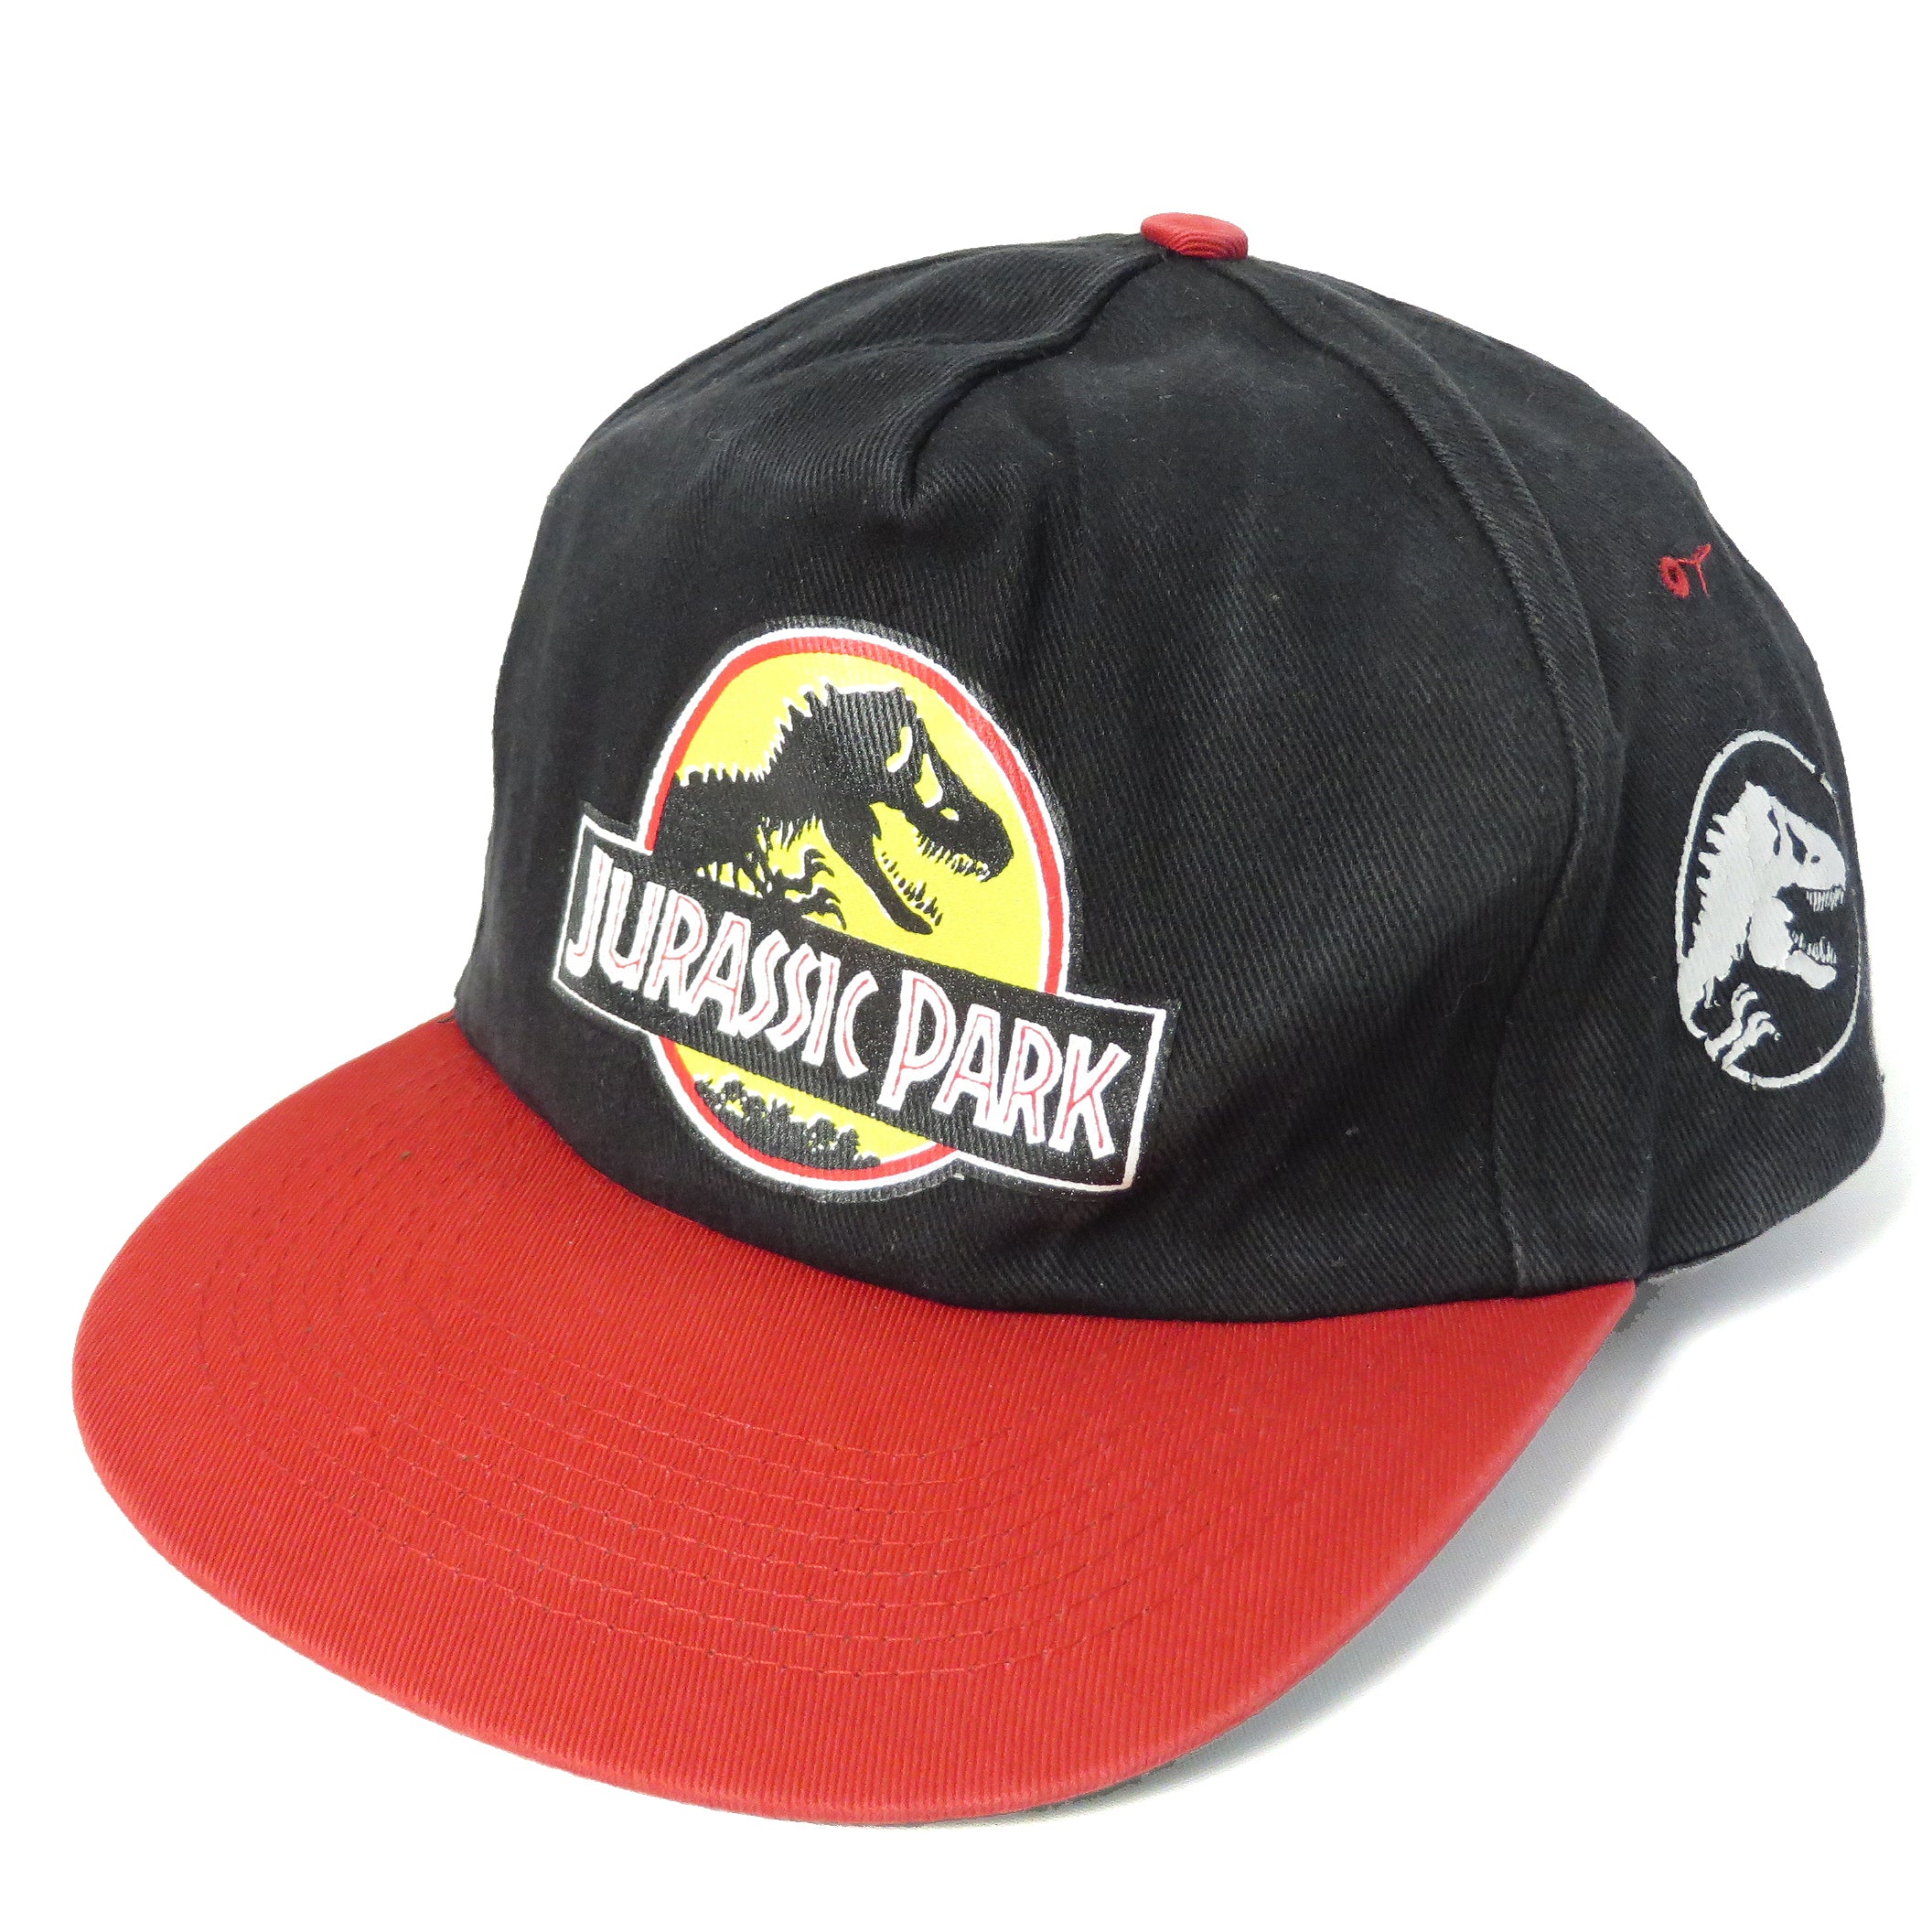 Vintage Jurassic Park Snapback Hat